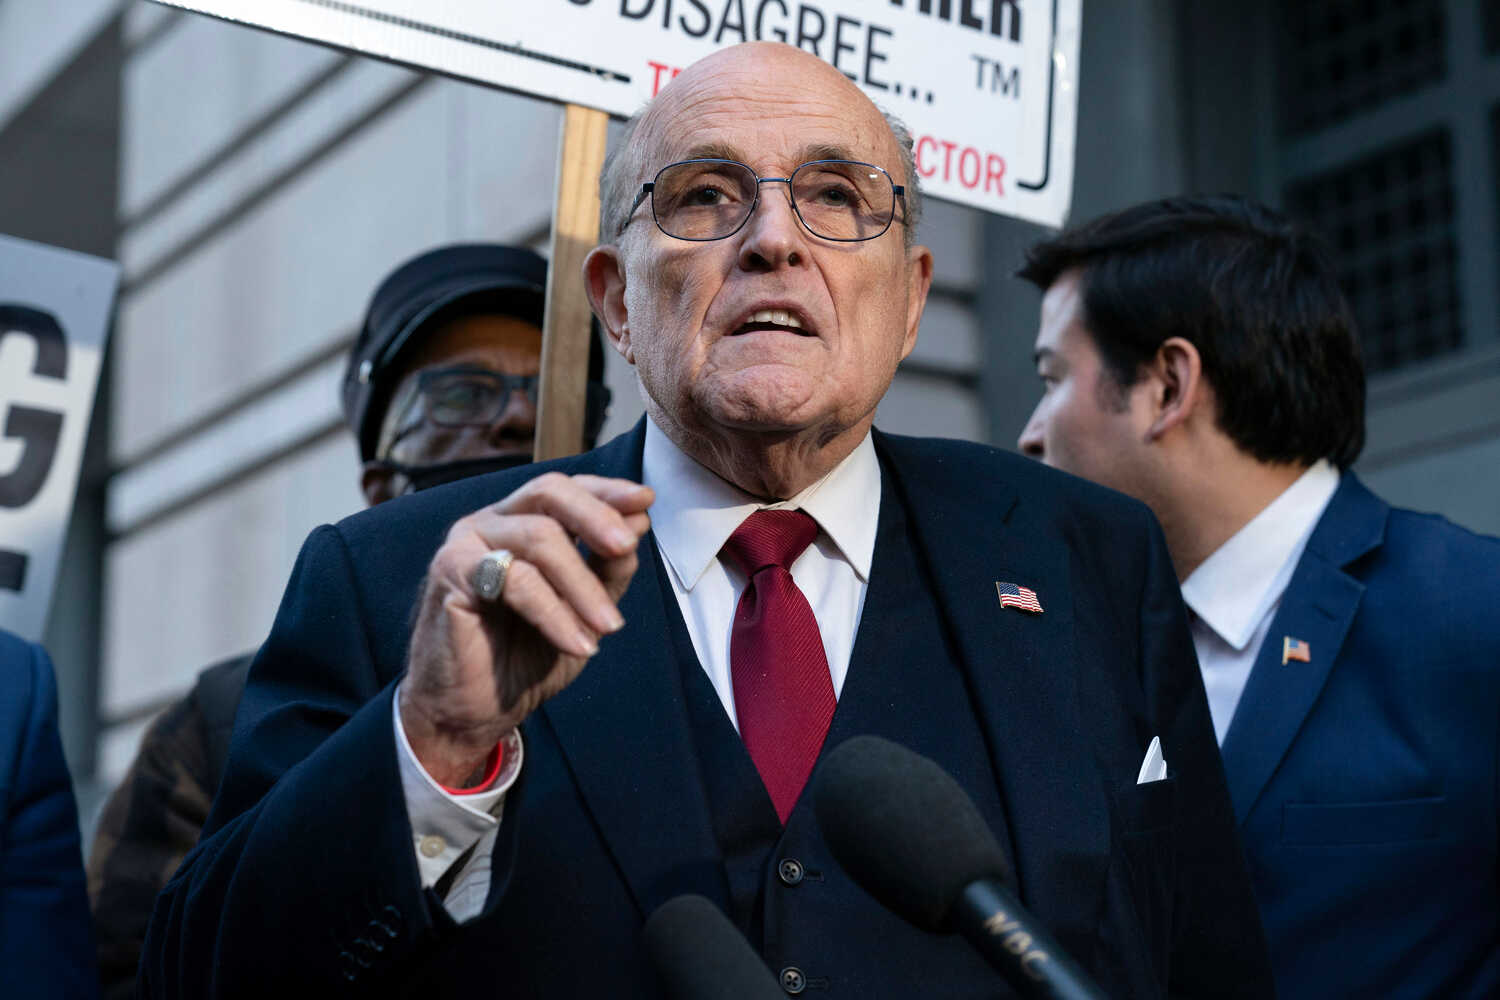 Rudolph W. Giuliani, the former mayor of New York, was disbarred effective immediately.